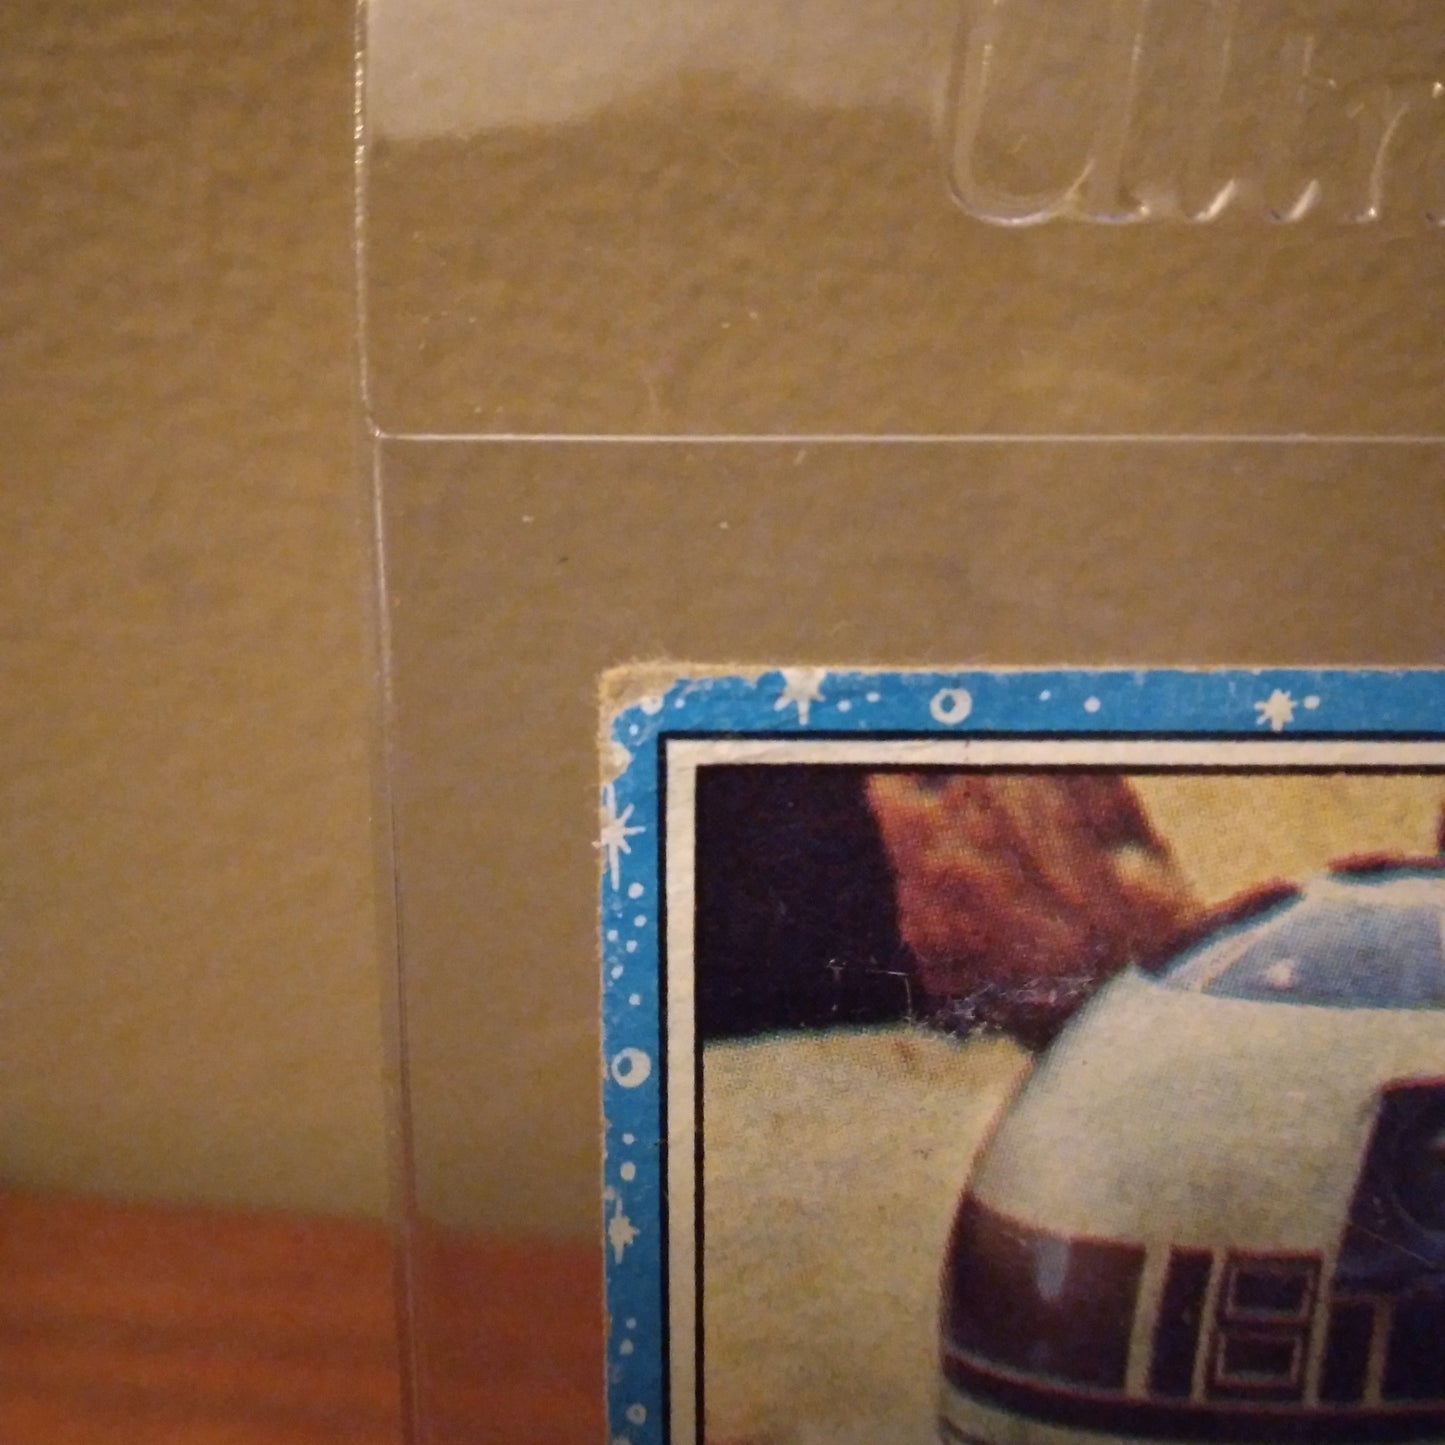 1977 Topps Star Wars Series 1 R2-D2 Rookie Card